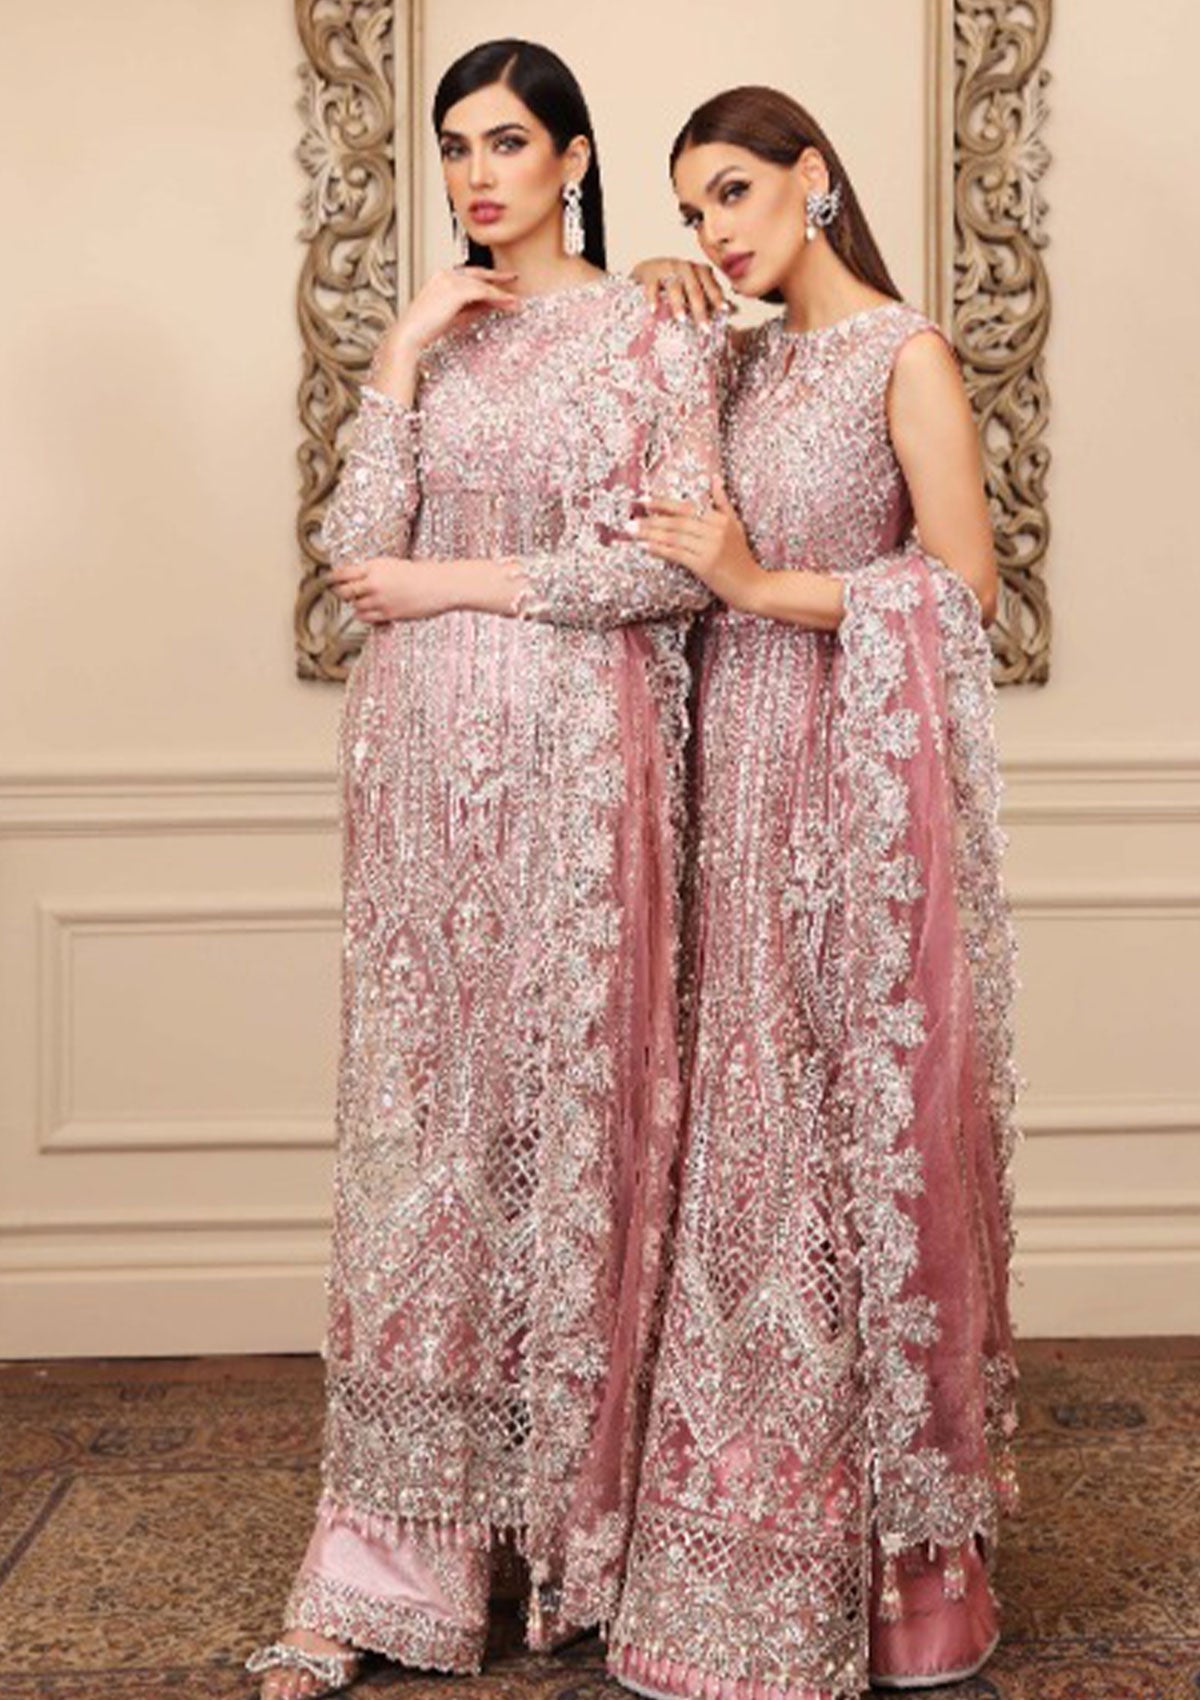 Formal Dress - Anaya - Opulence - AC#8 (Chloe) available at Saleem Fabrics Traditions